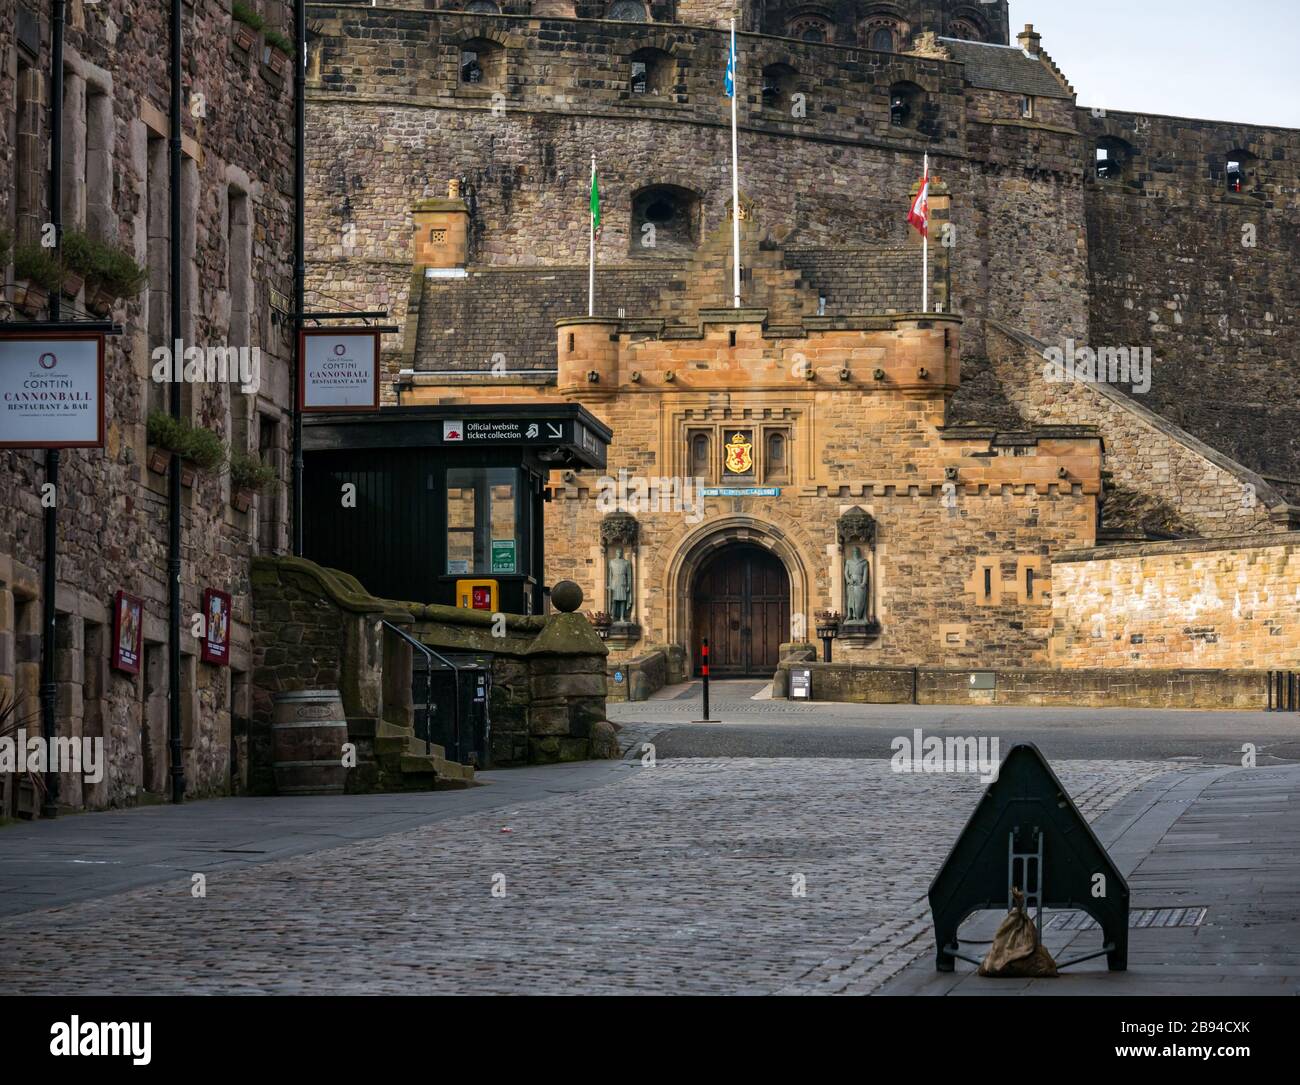 Deserted with no tourists at closed Edinburgh castle during Covid-19 Coronovirus pandemic, Edinburgh, Scotland, UK Stock Photo